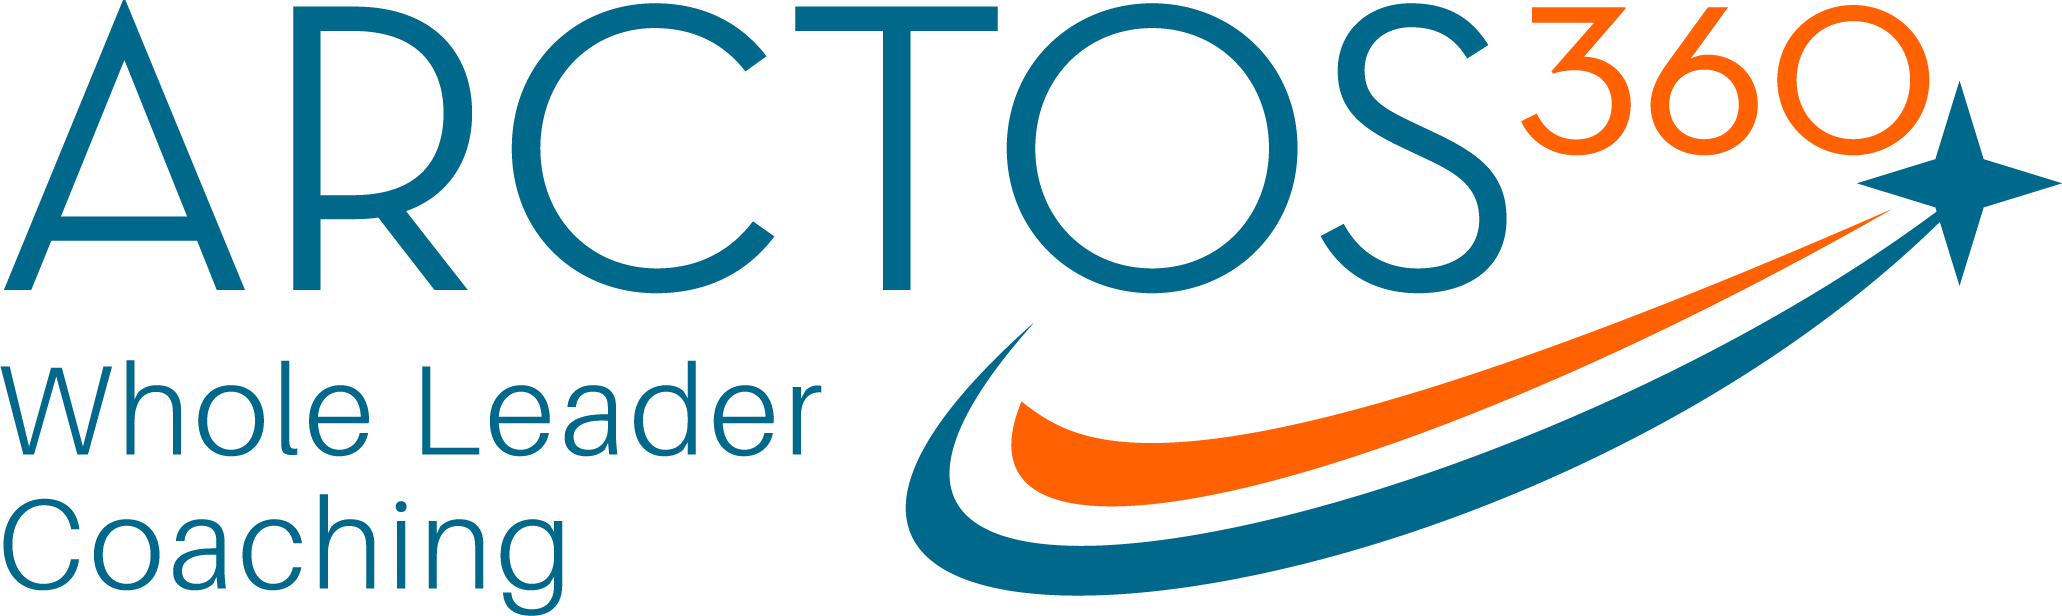 Arctos 360 Logo